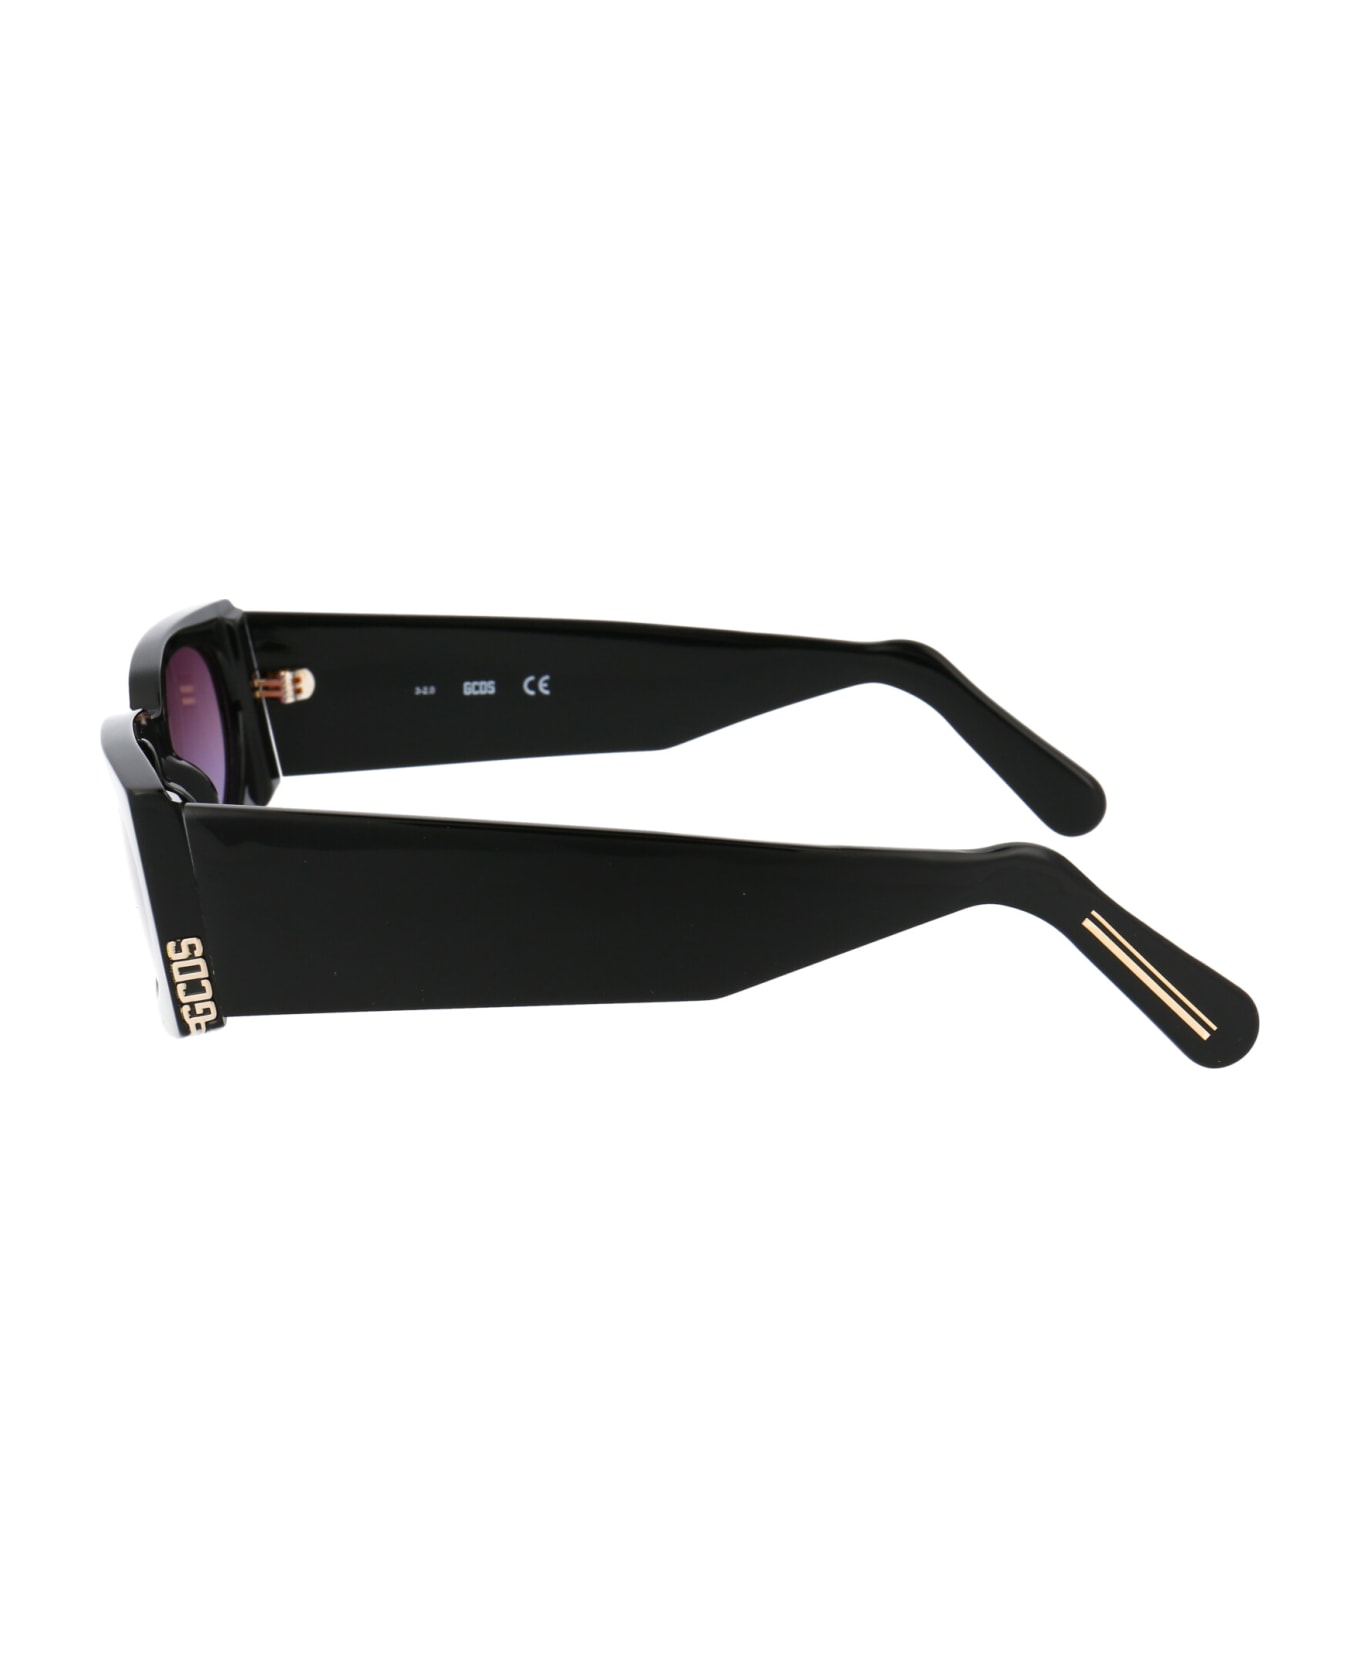 GCDS Gd0016 Sunglasses - 01Z BLACK